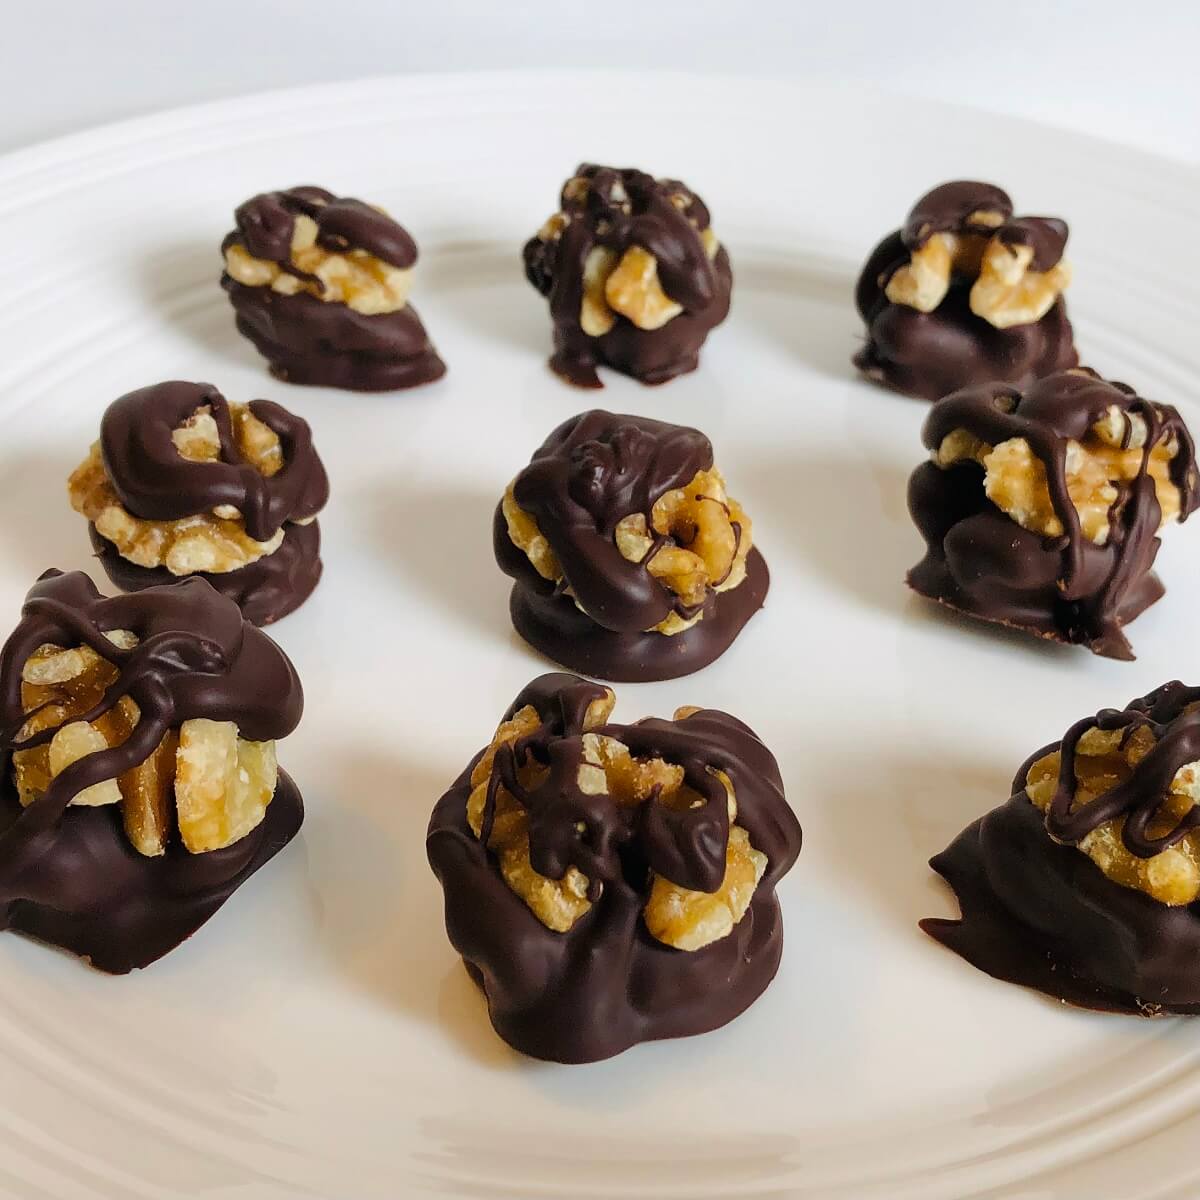 Chocolate walnuts on a white plate.